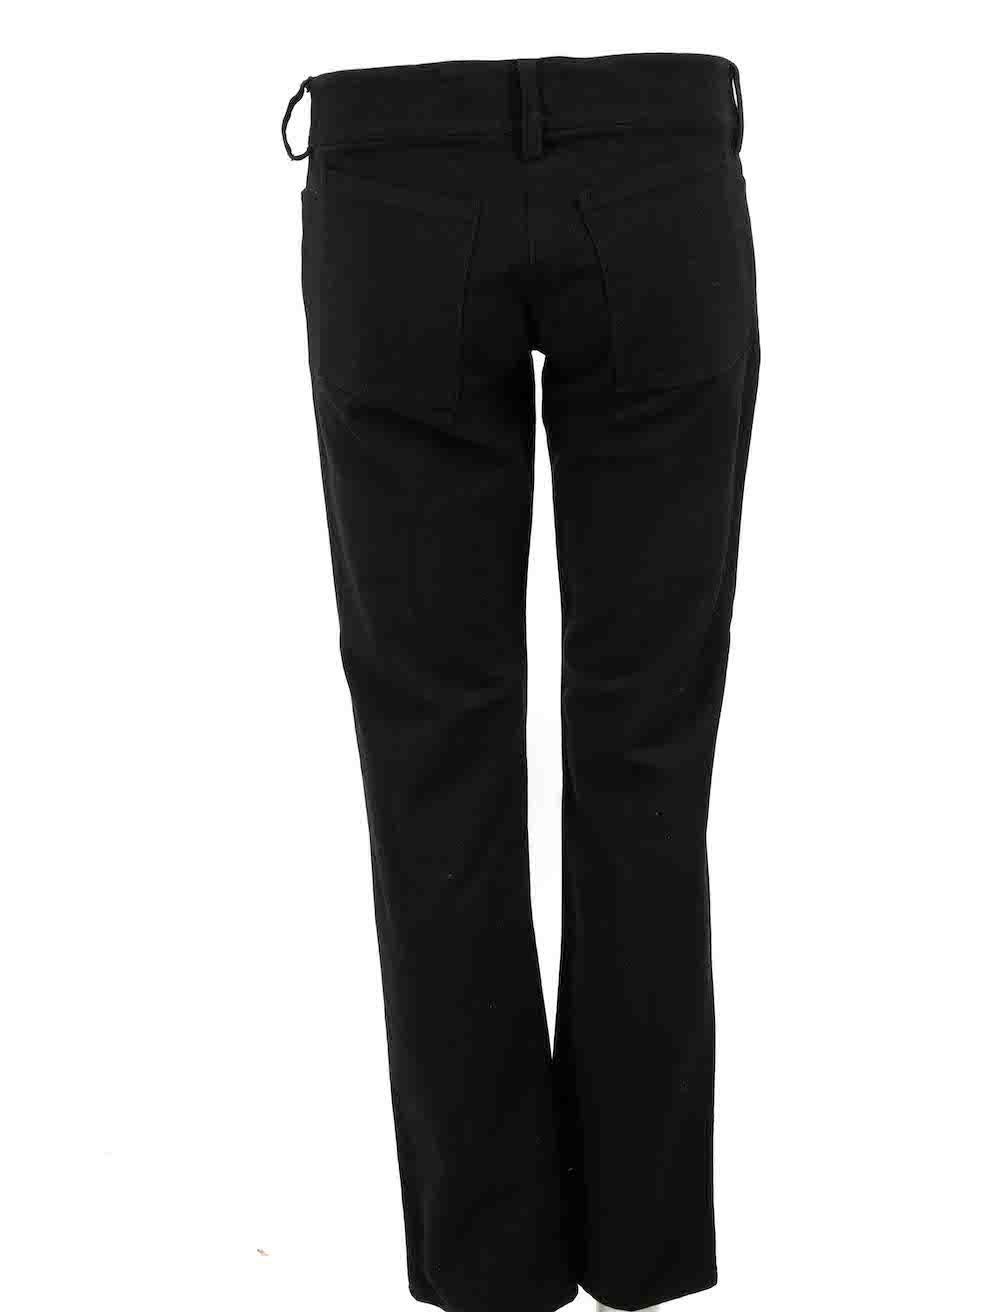 Balenciaga Le Dix Balenciaga Black Seam Detail Straight Trousers Size L In Excellent Condition For Sale In London, GB